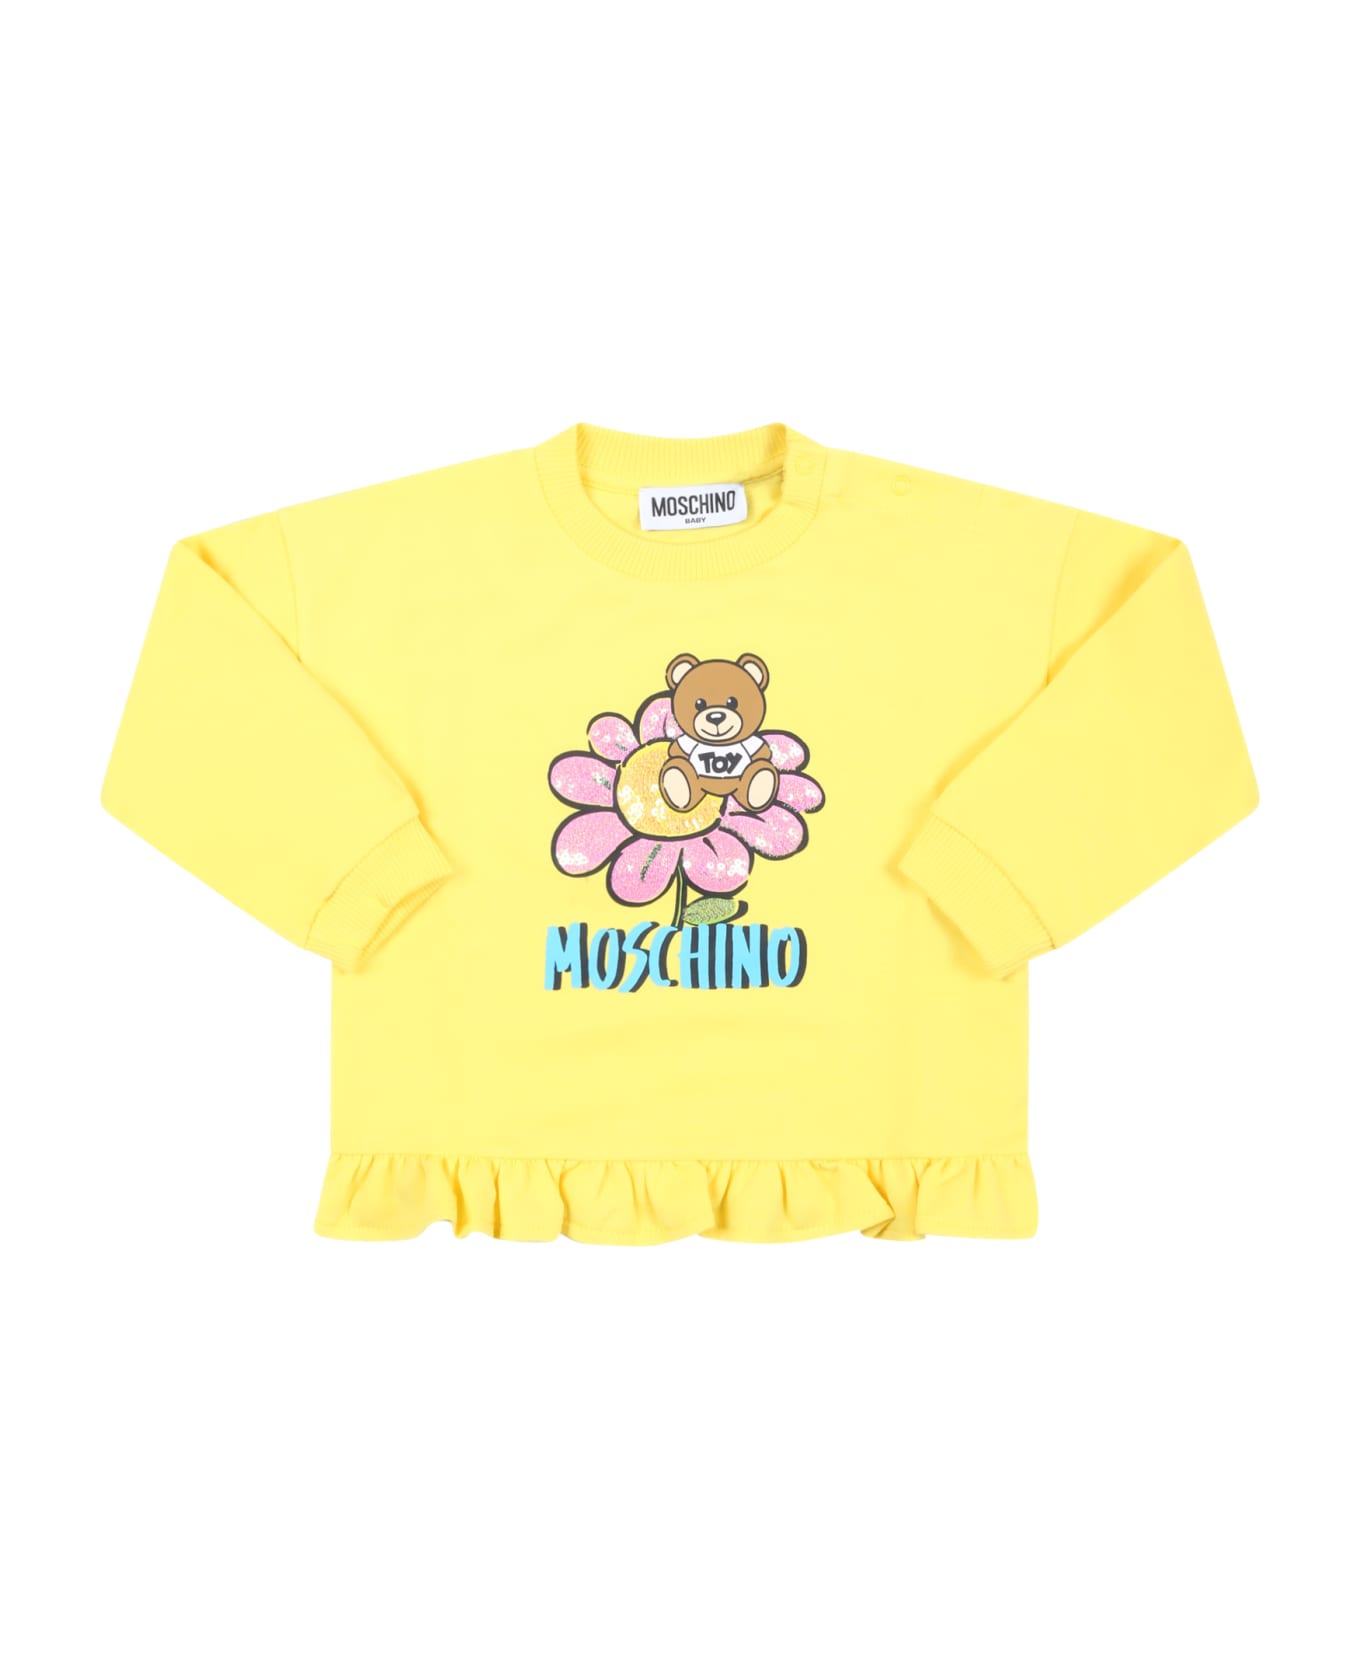 Moschino Yellow Sweatshirt For Baby Girl With Teddy Bear And Flower - Yellow